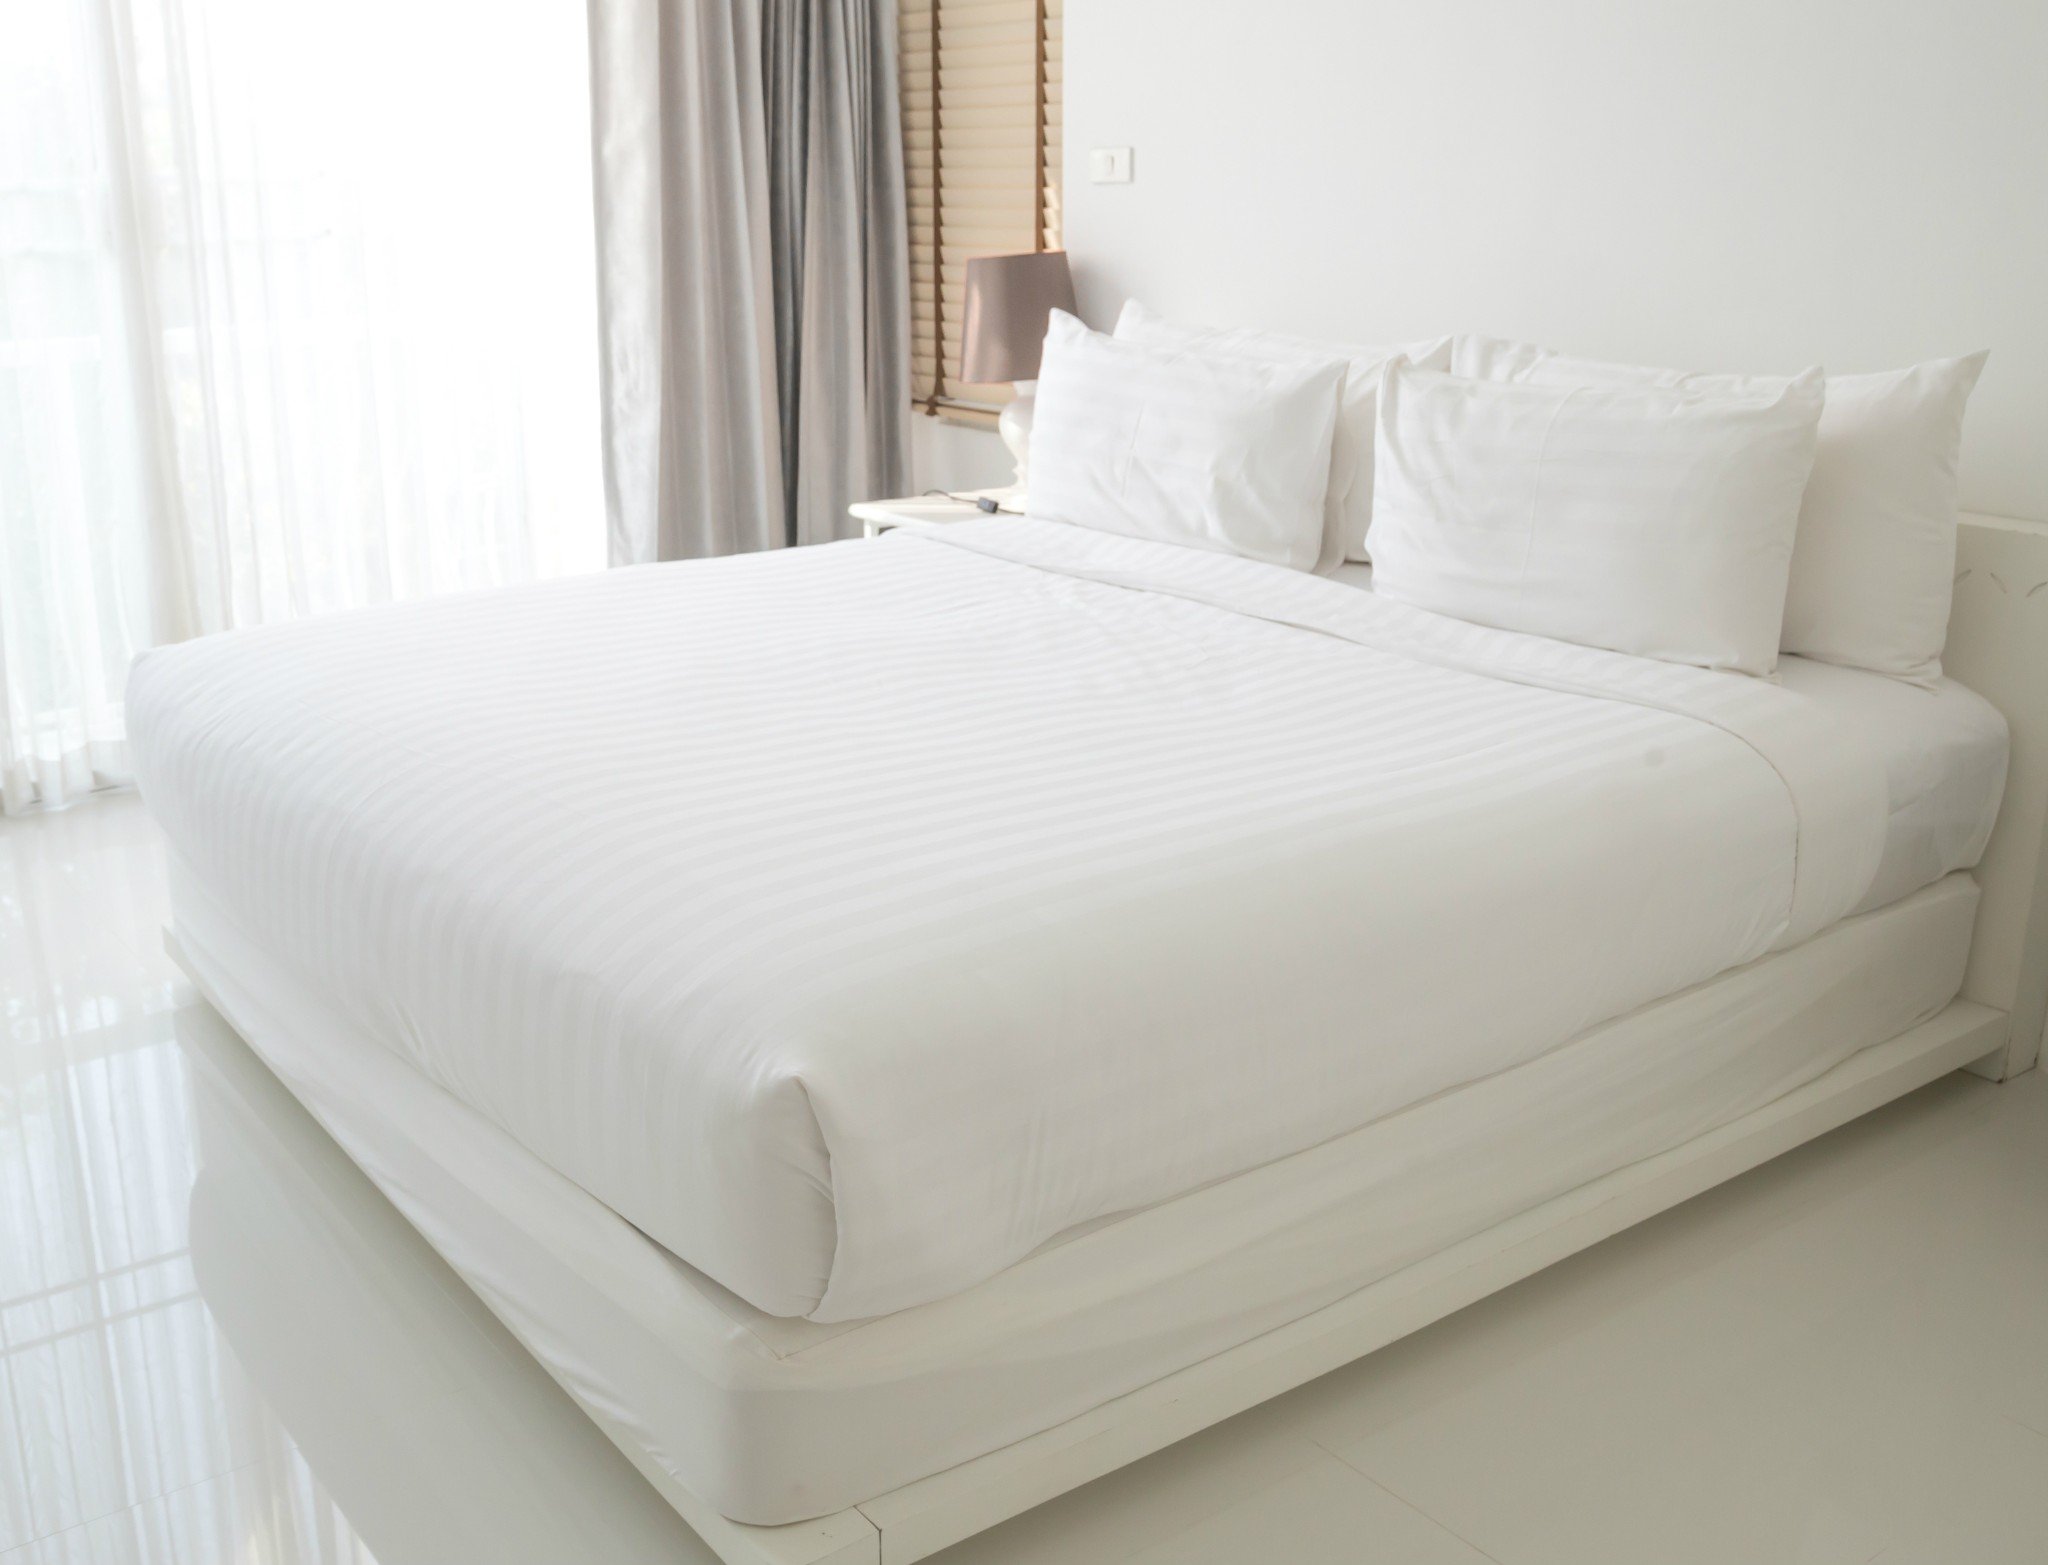 mattress fitted bed sheet